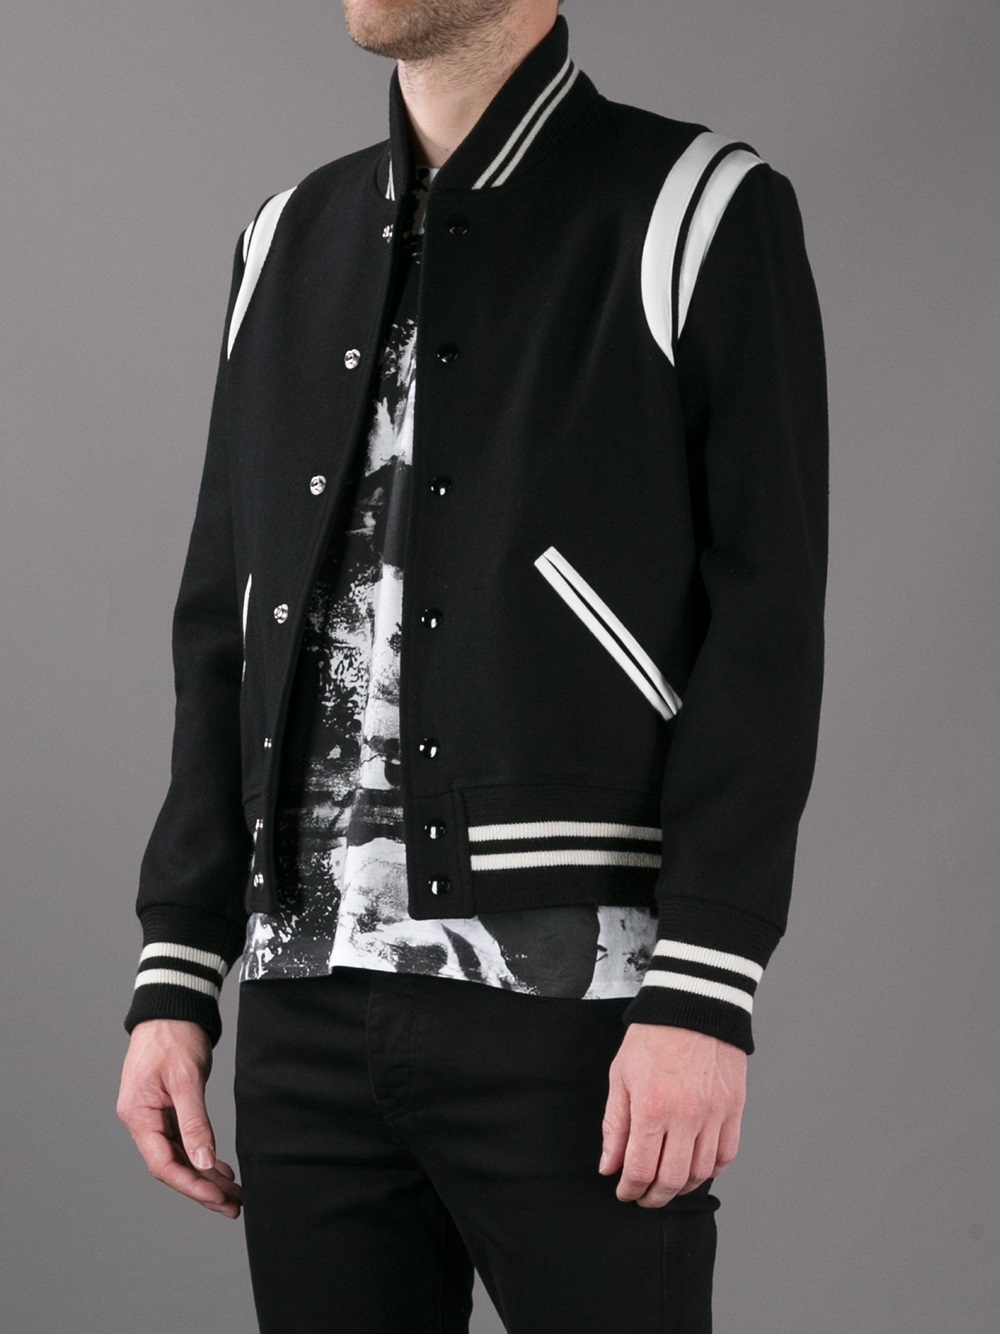 Saint Laurent Varsity Jacket in Black for Men - Lyst